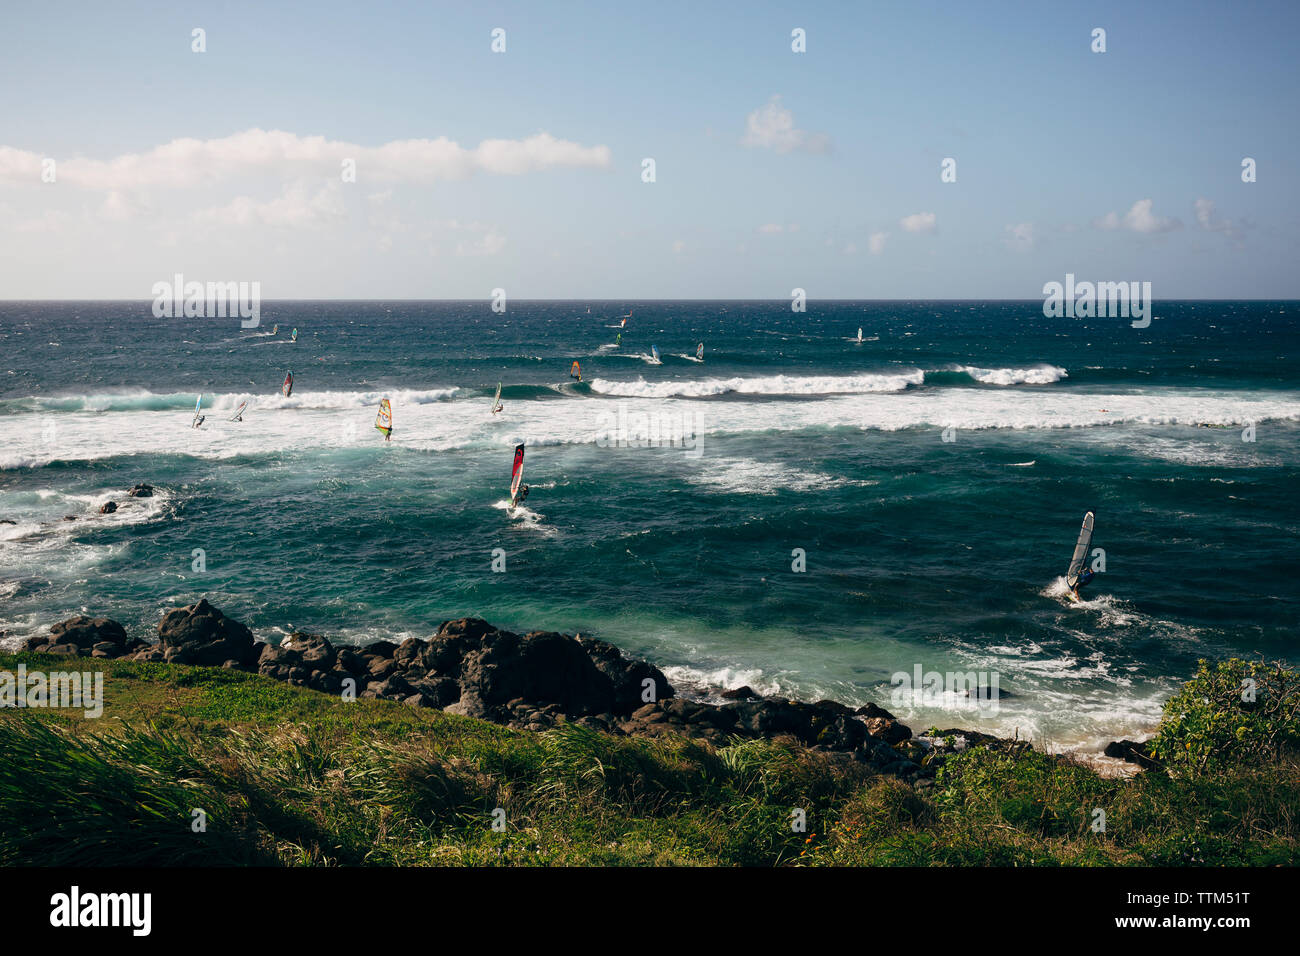 People windsurfing on sea against sky Stock Photo